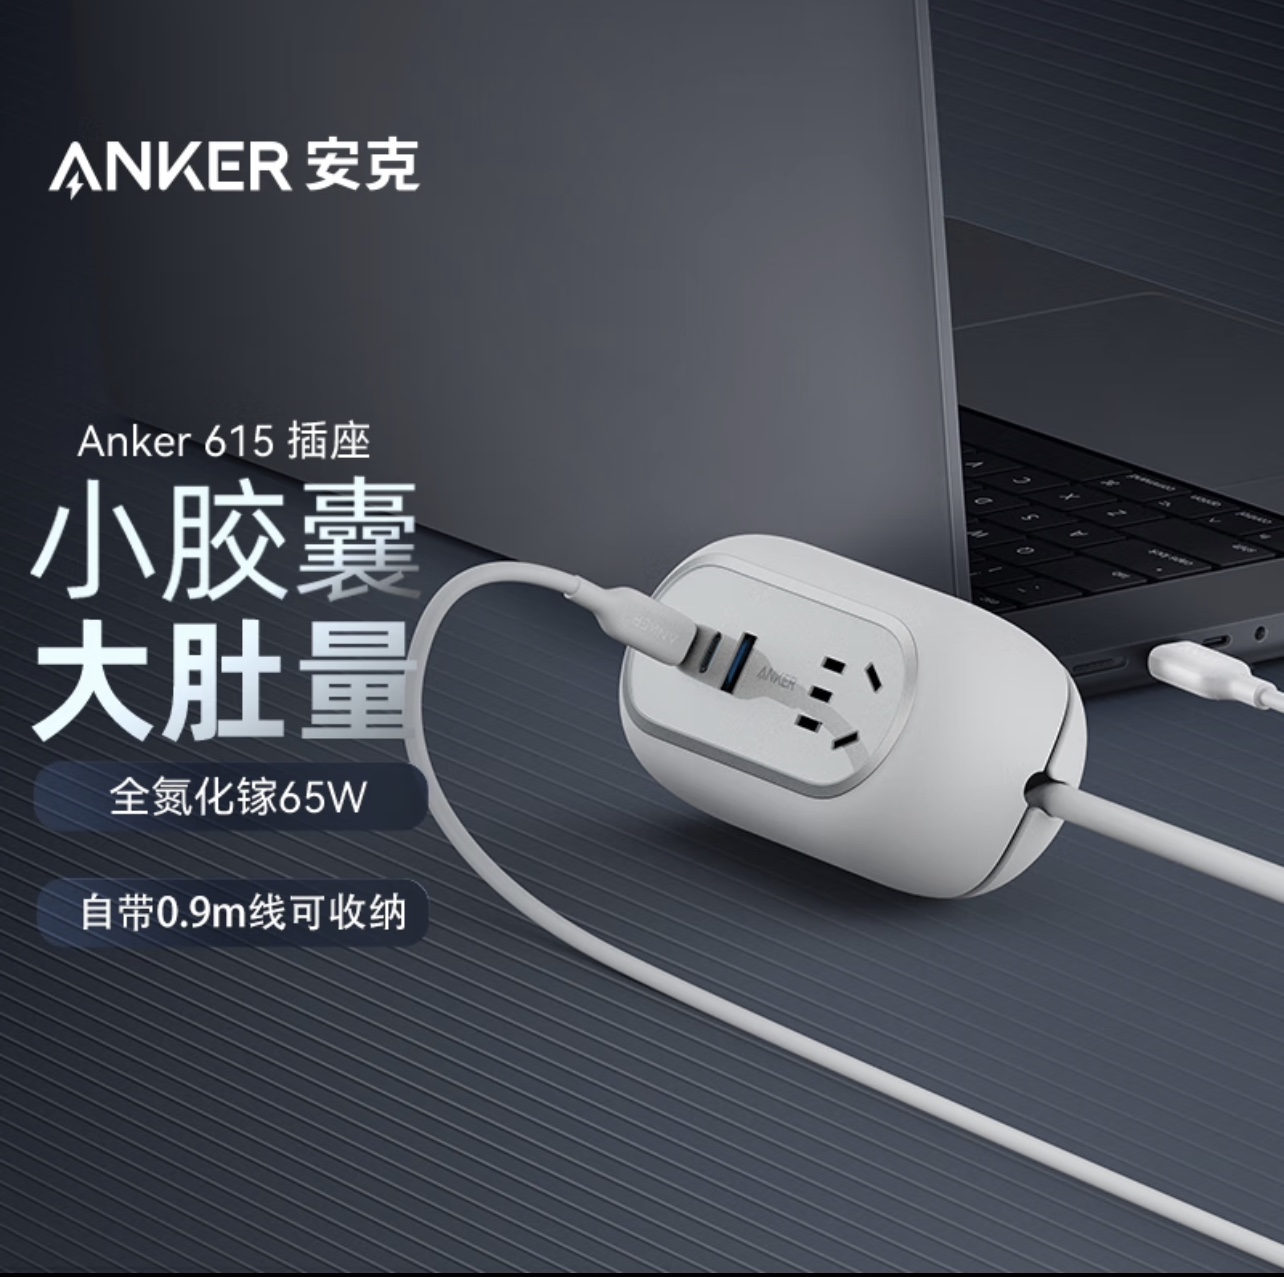 Anker Anker 615 All-nitride gallium 65W socket desktop Multi-port charger for apple iphone-Taobao